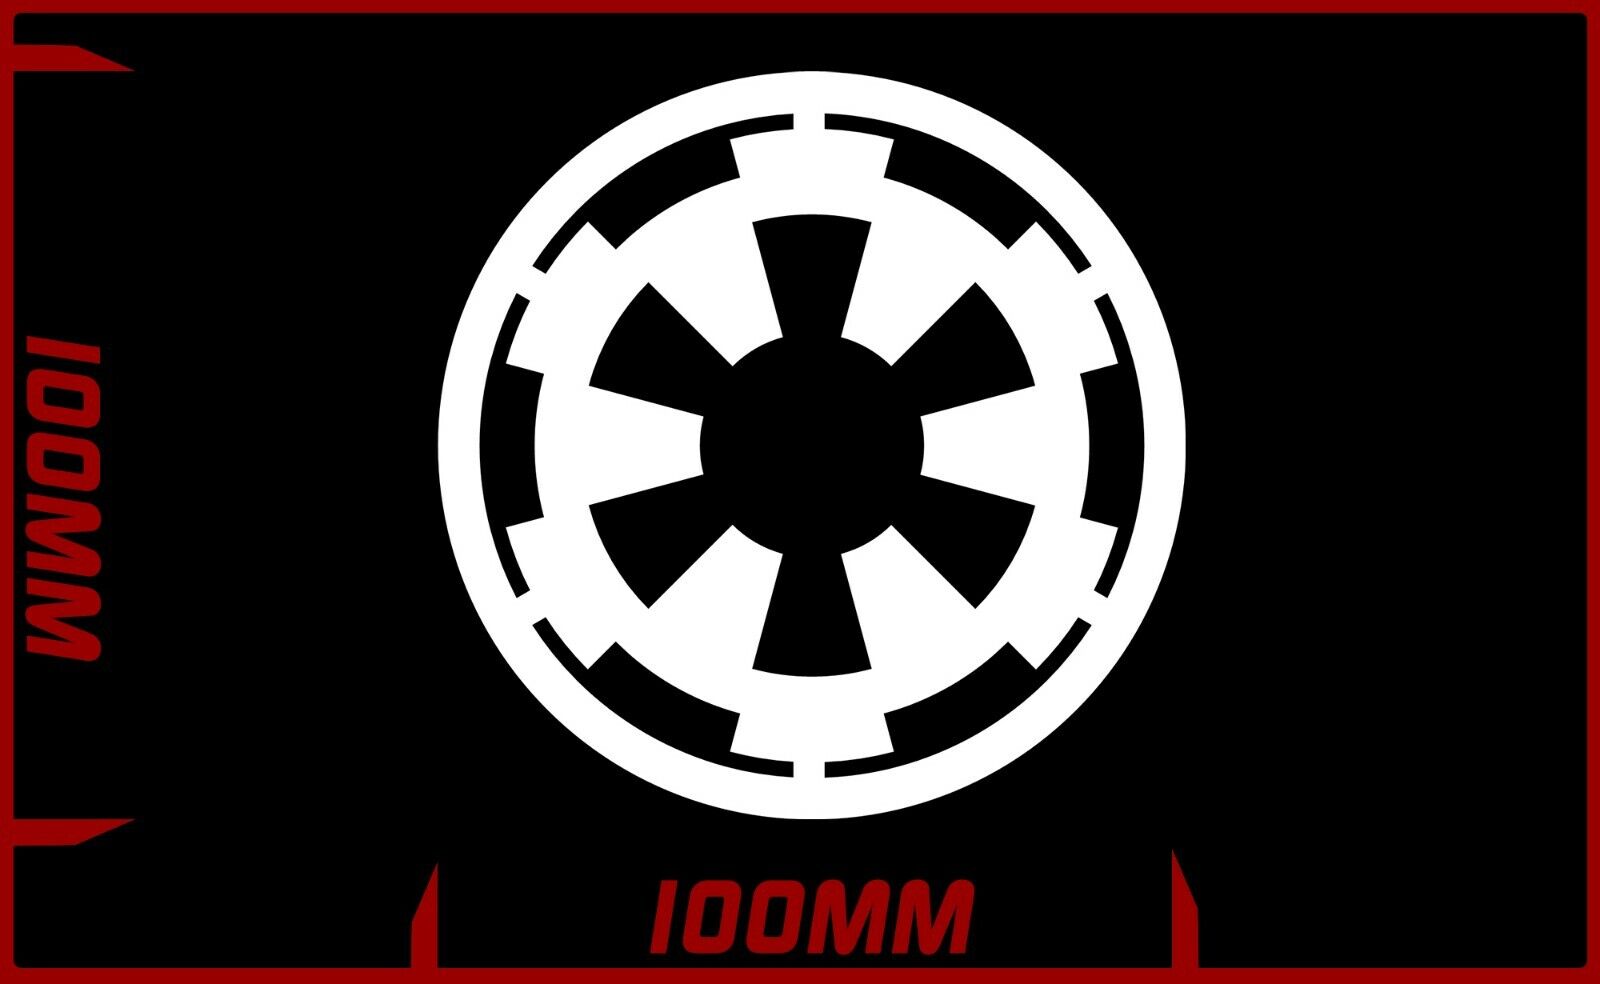 Star wars Galactic Empire logo decal vinyl sticker choose your colour